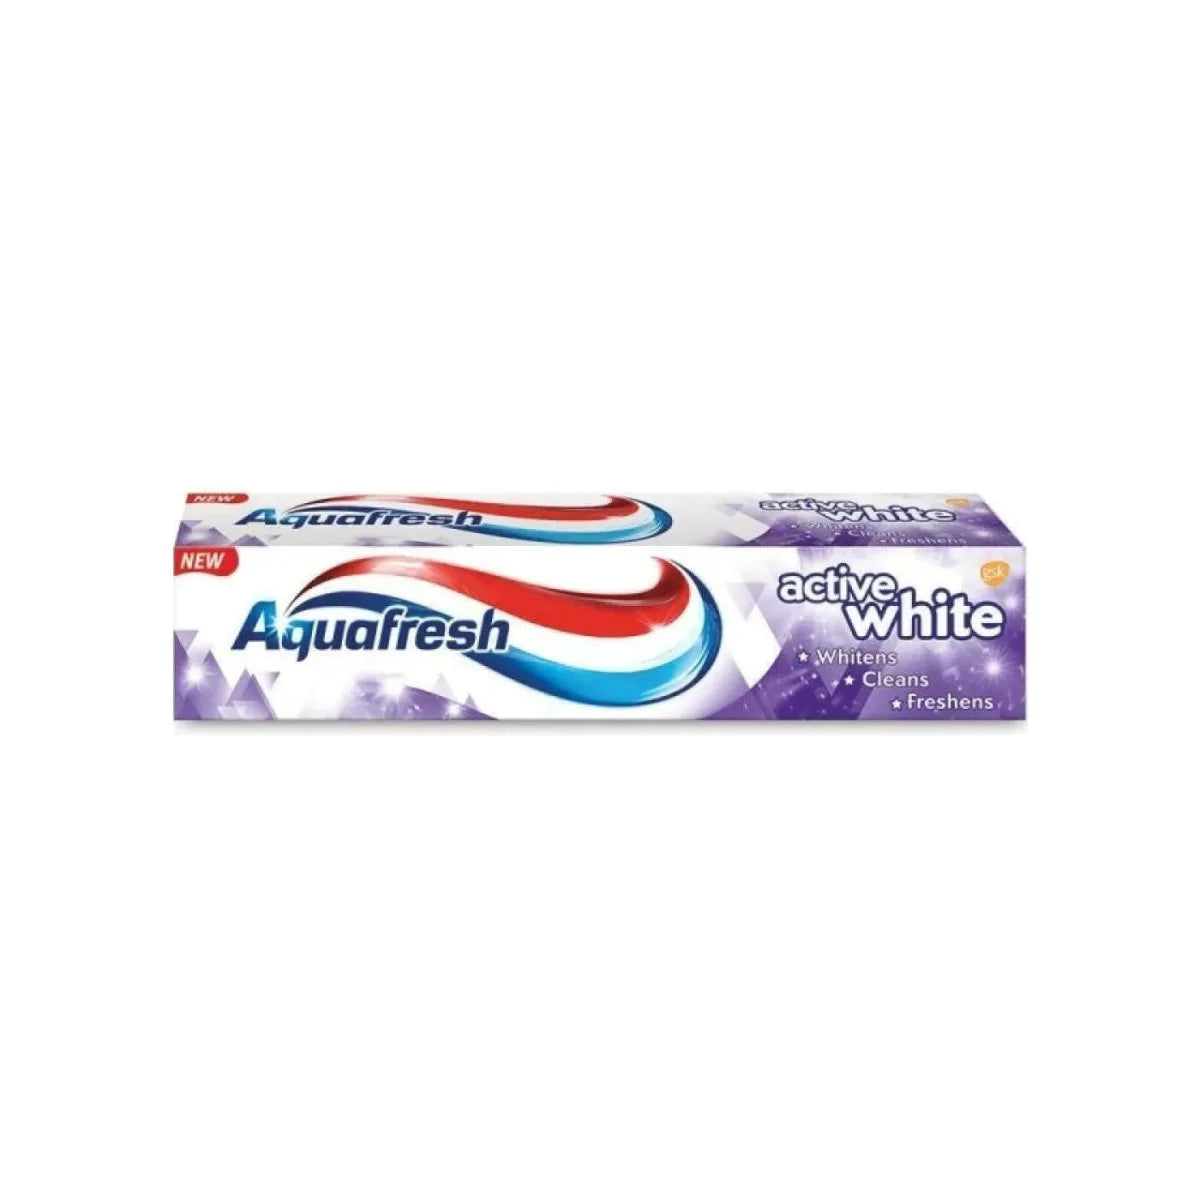 AQUAFRESH - Toothpaste | MazenOnline